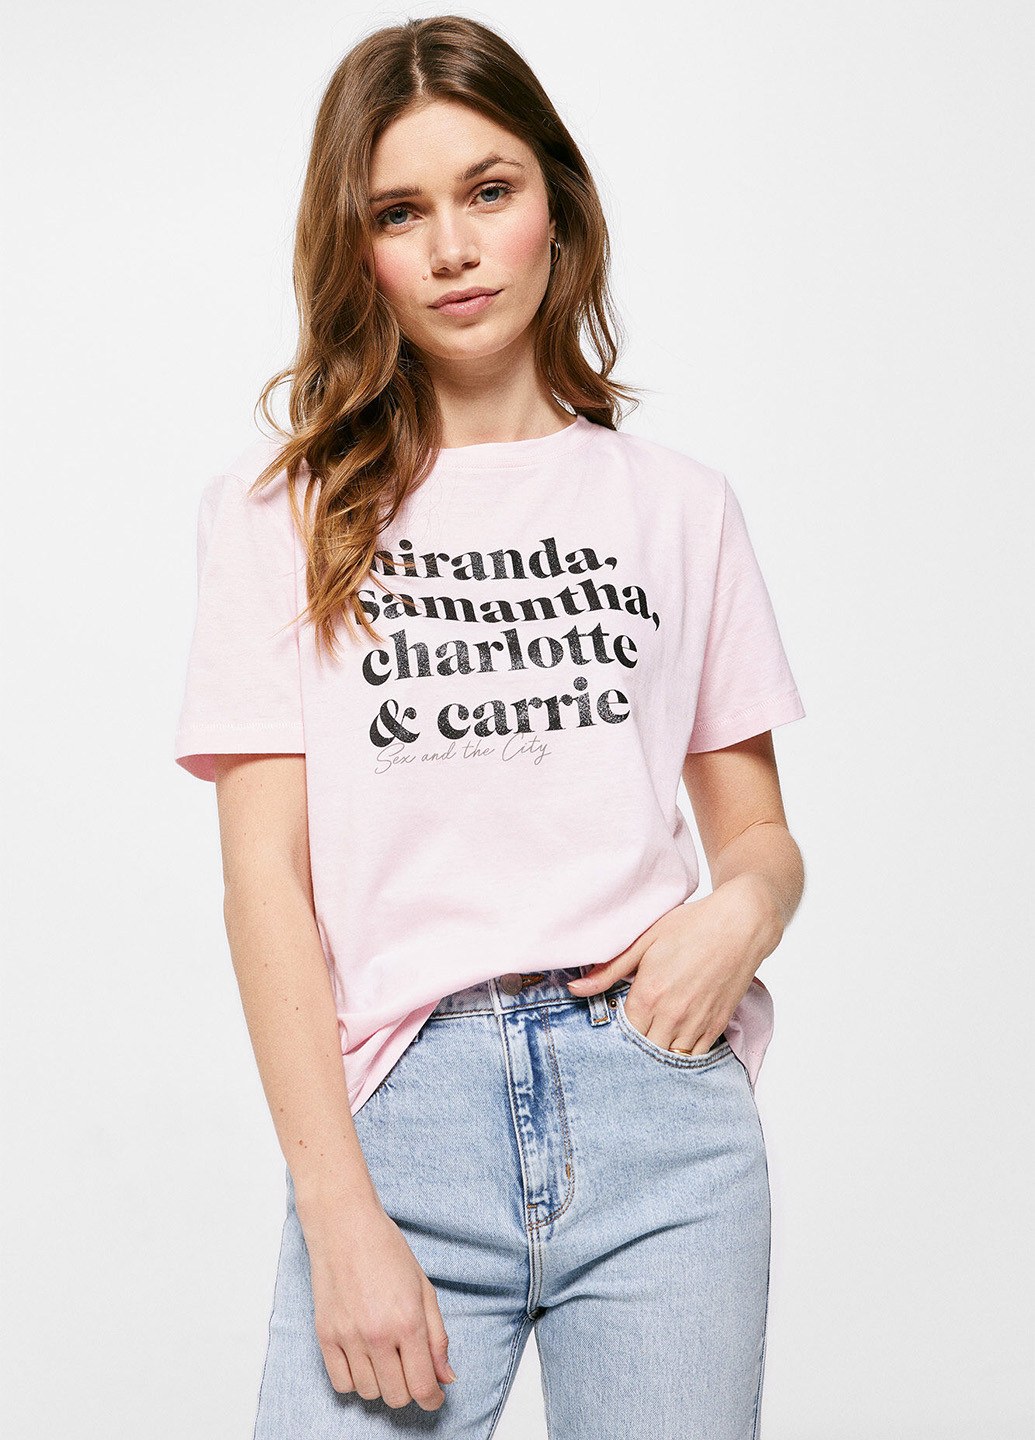 Розовая летняя футболка Springfield